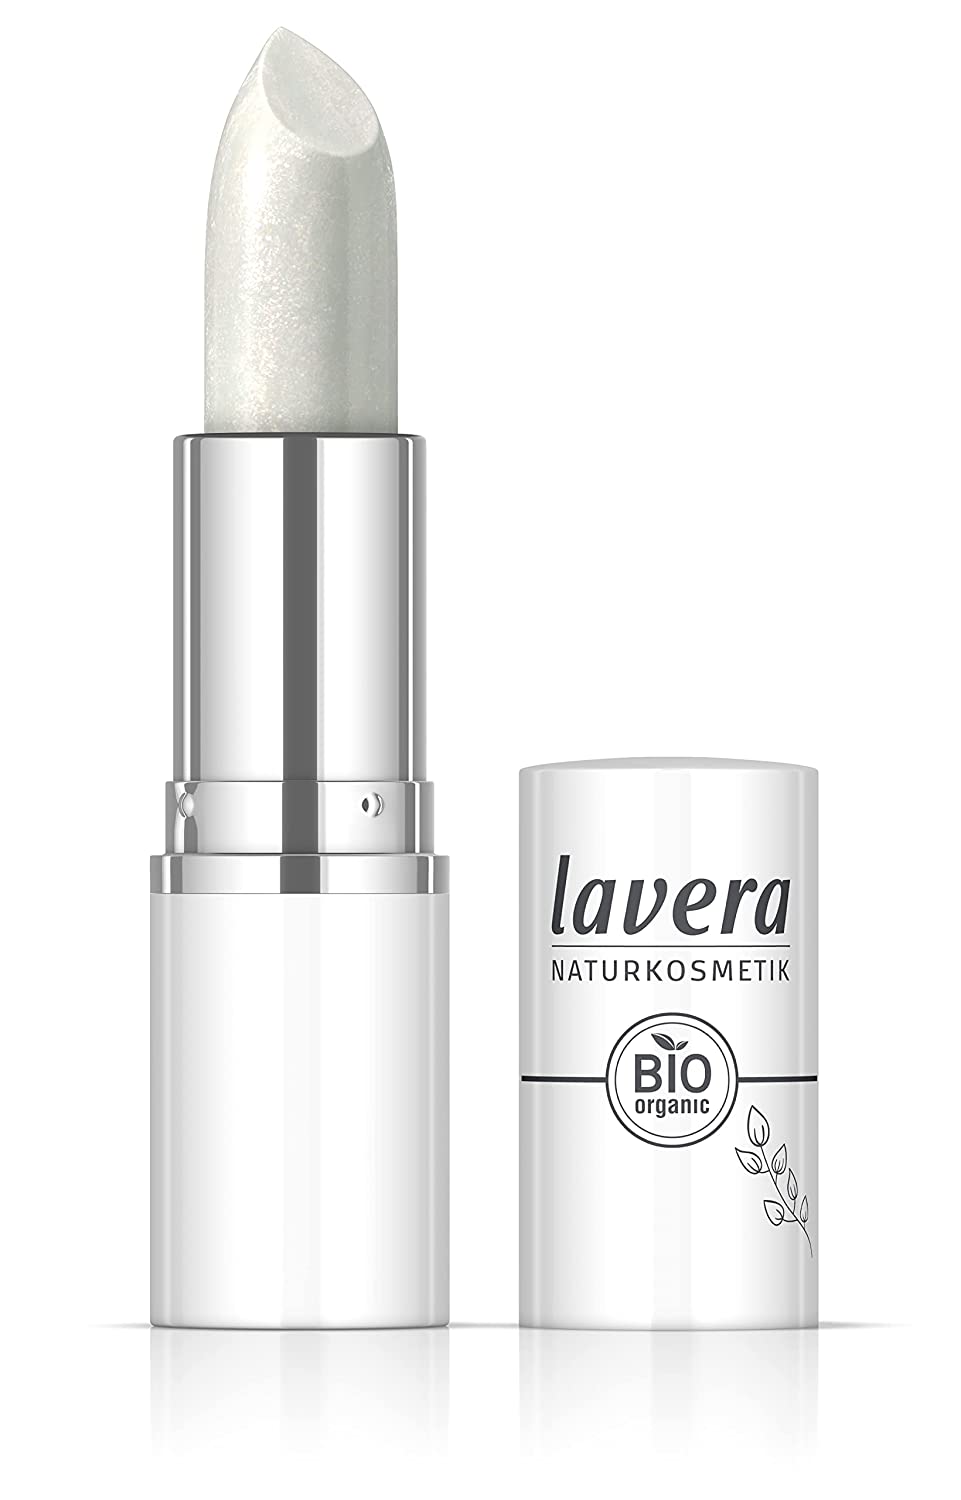 Lavera Candy Quartz Lipstick - White Aura 02 - Feather -Light Texture - Up to 6 Hours Hold - Vegan - Natural Cosmetics (1 x 17.9 G)